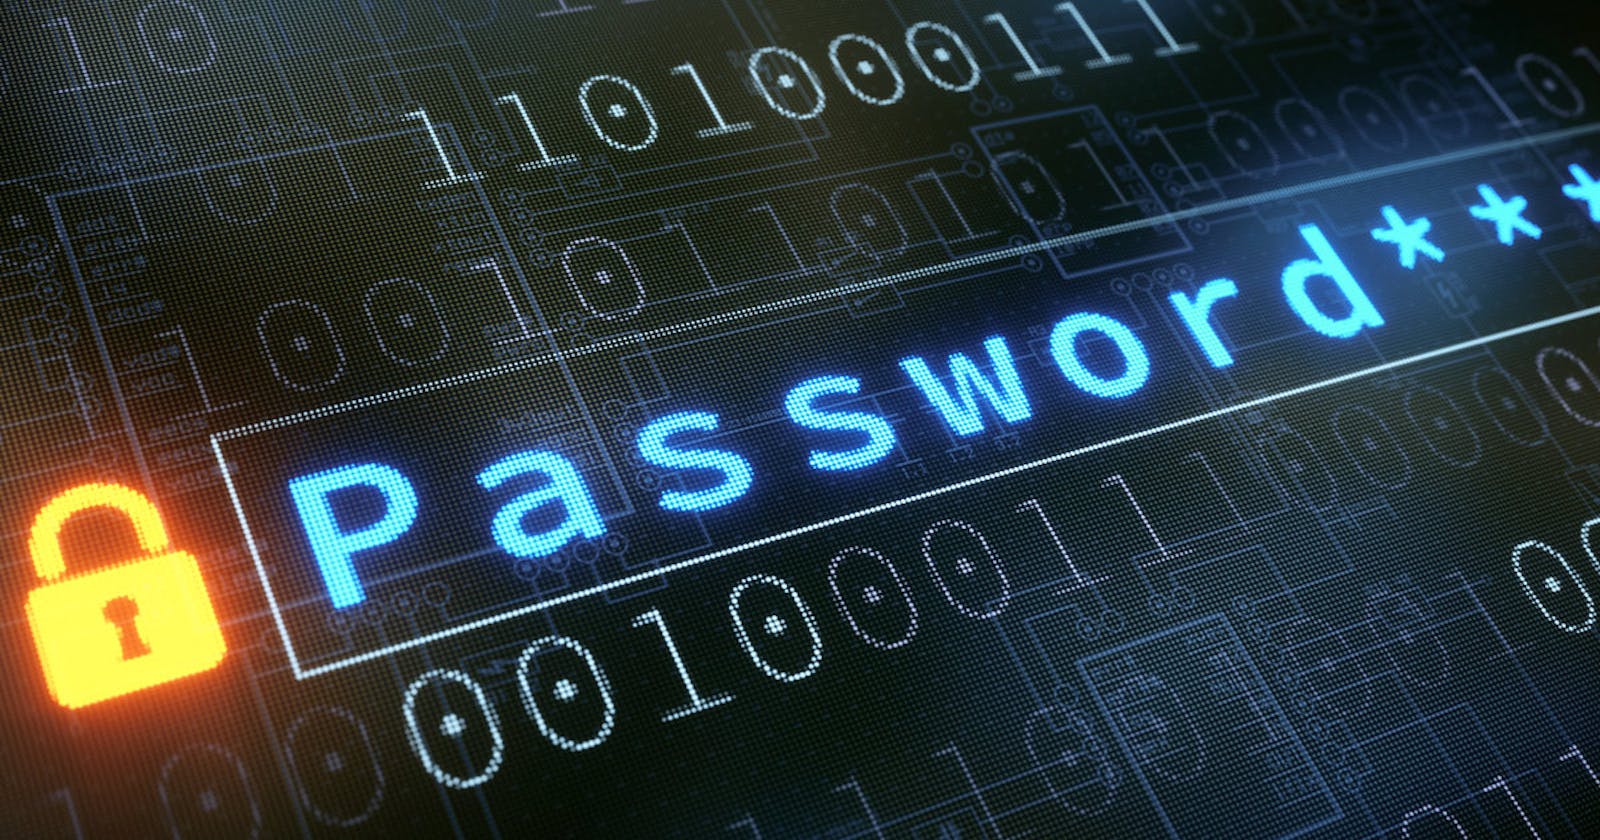 Testing Password Reset functions